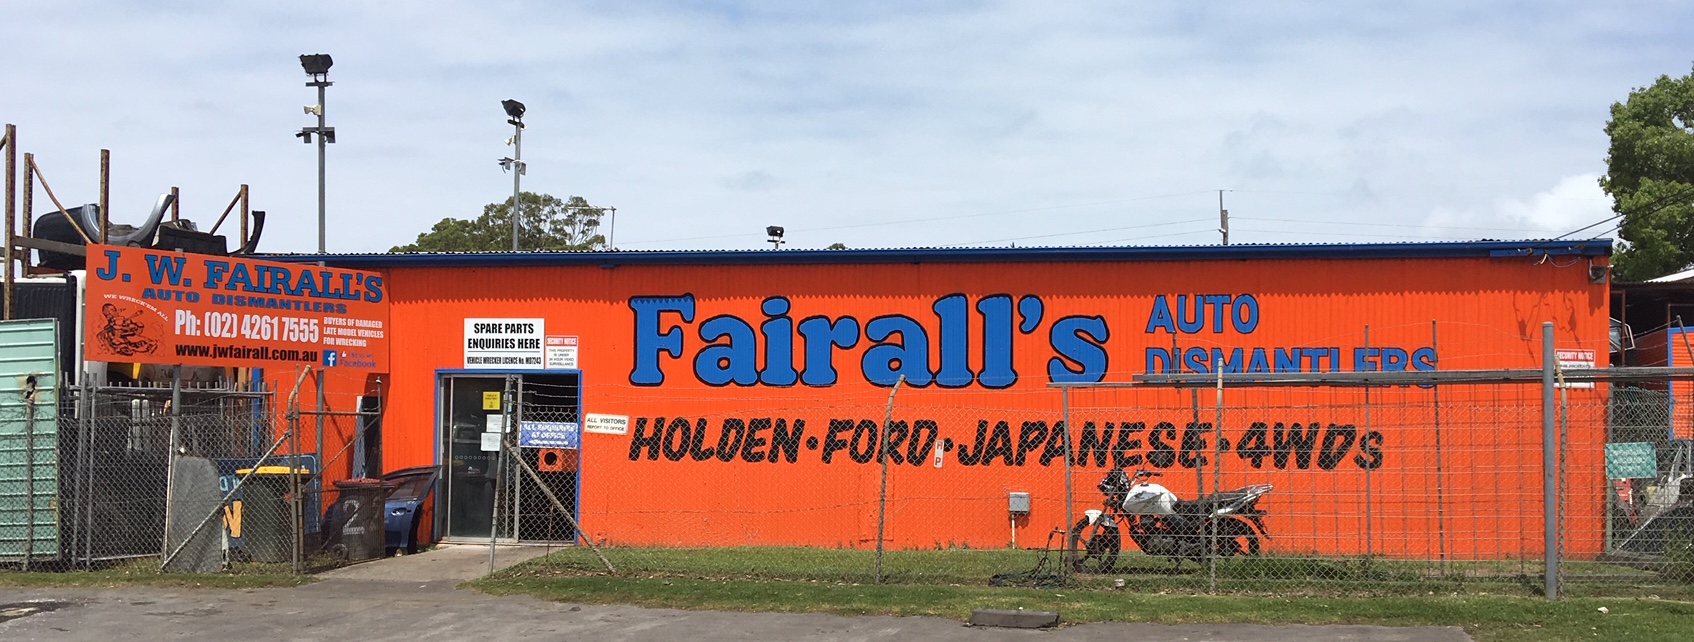 Foto de Fairalls Auto Wreckers & Towing Wollongong